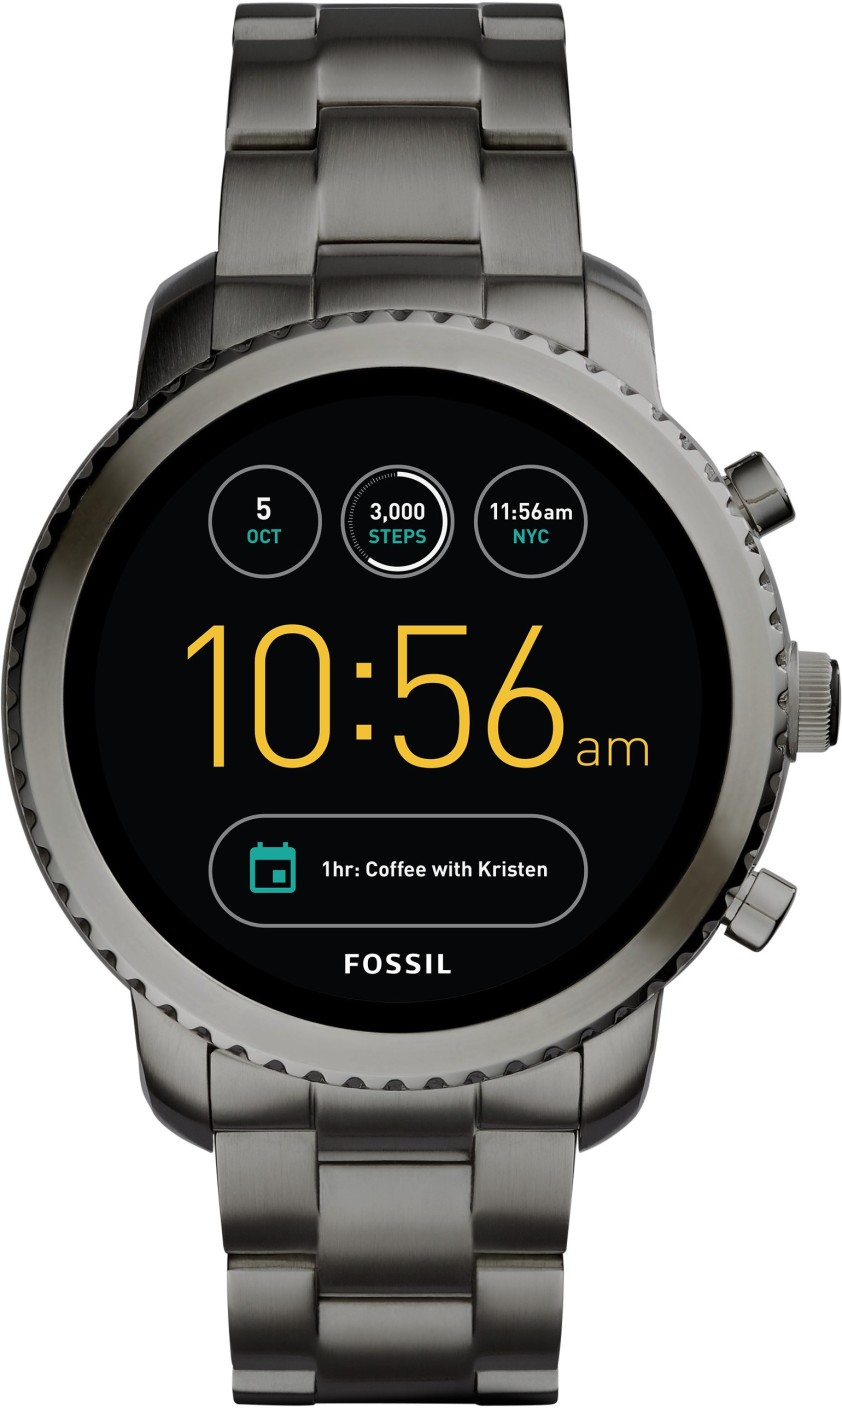 Fossil Gen 3 Q Explorist Grey Smartwatch Price in India - Buy Fossil ...